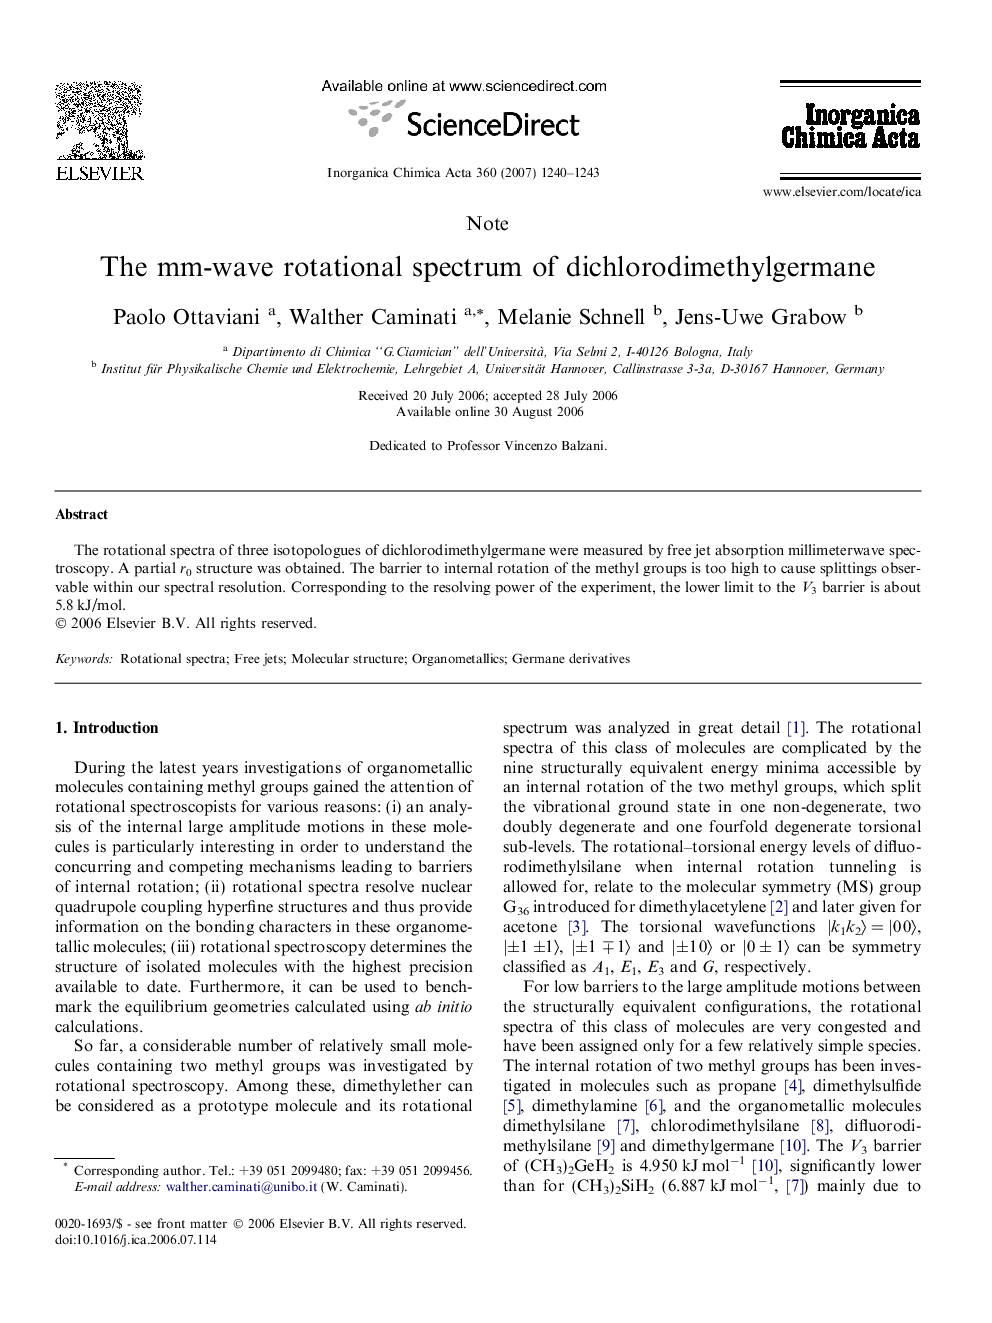 The mm-wave rotational spectrum of dichlorodimethylgermane